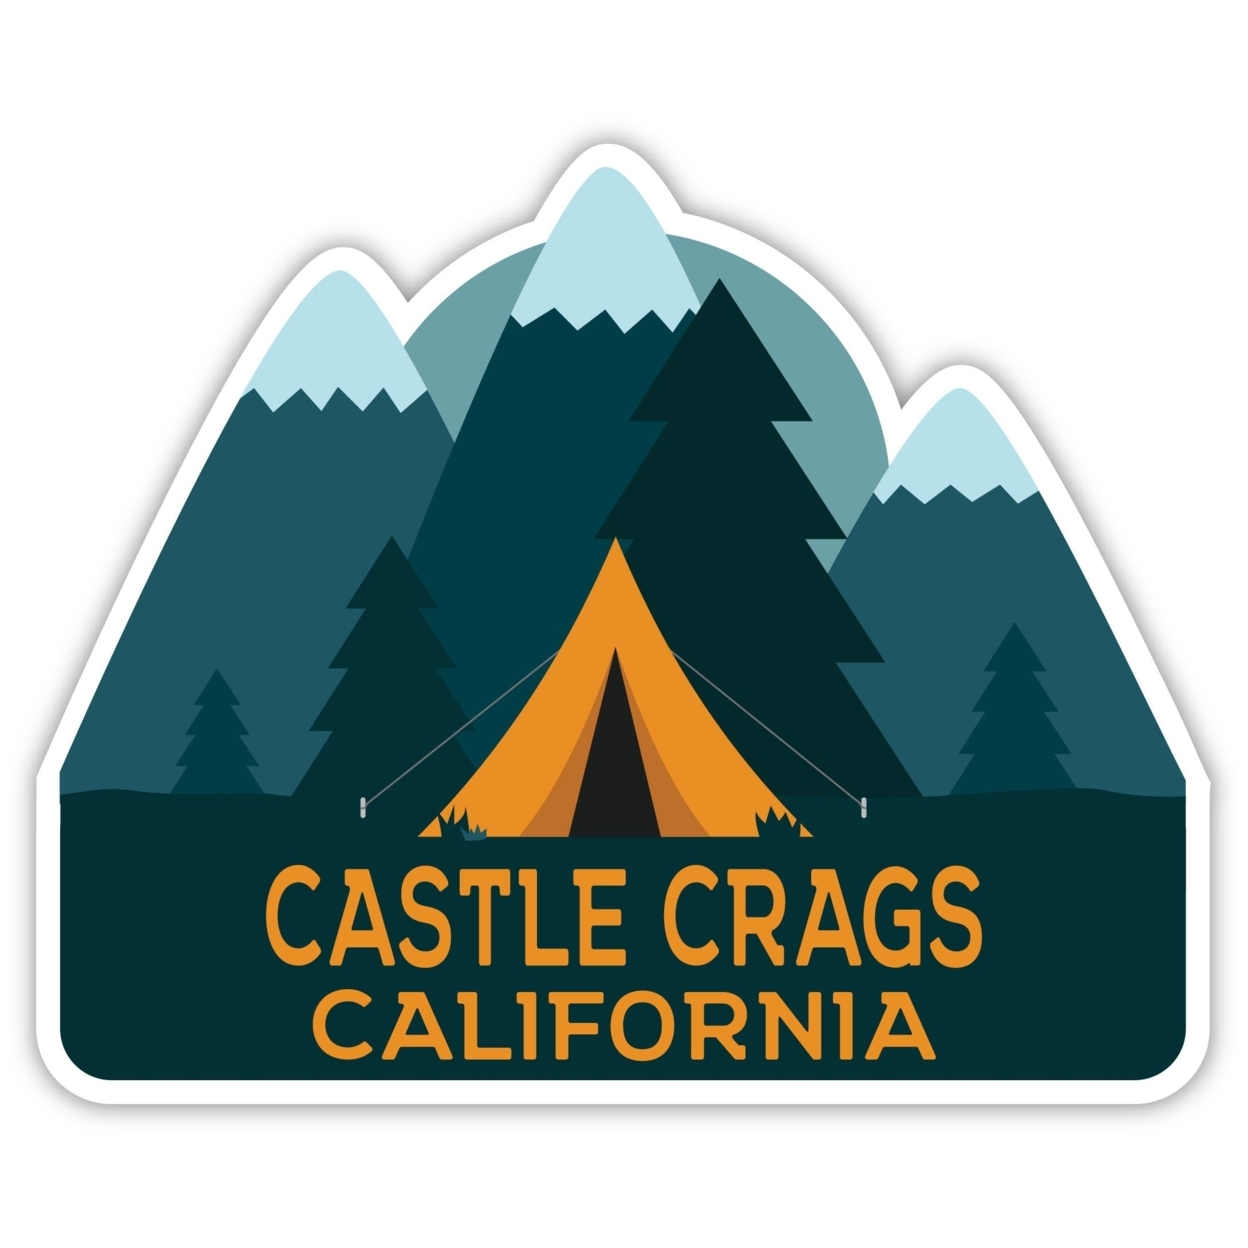 Castle Crags California Souvenir Decorative Stickers (Choose Theme And Size) - 4-Pack, 4-Inch, Tent